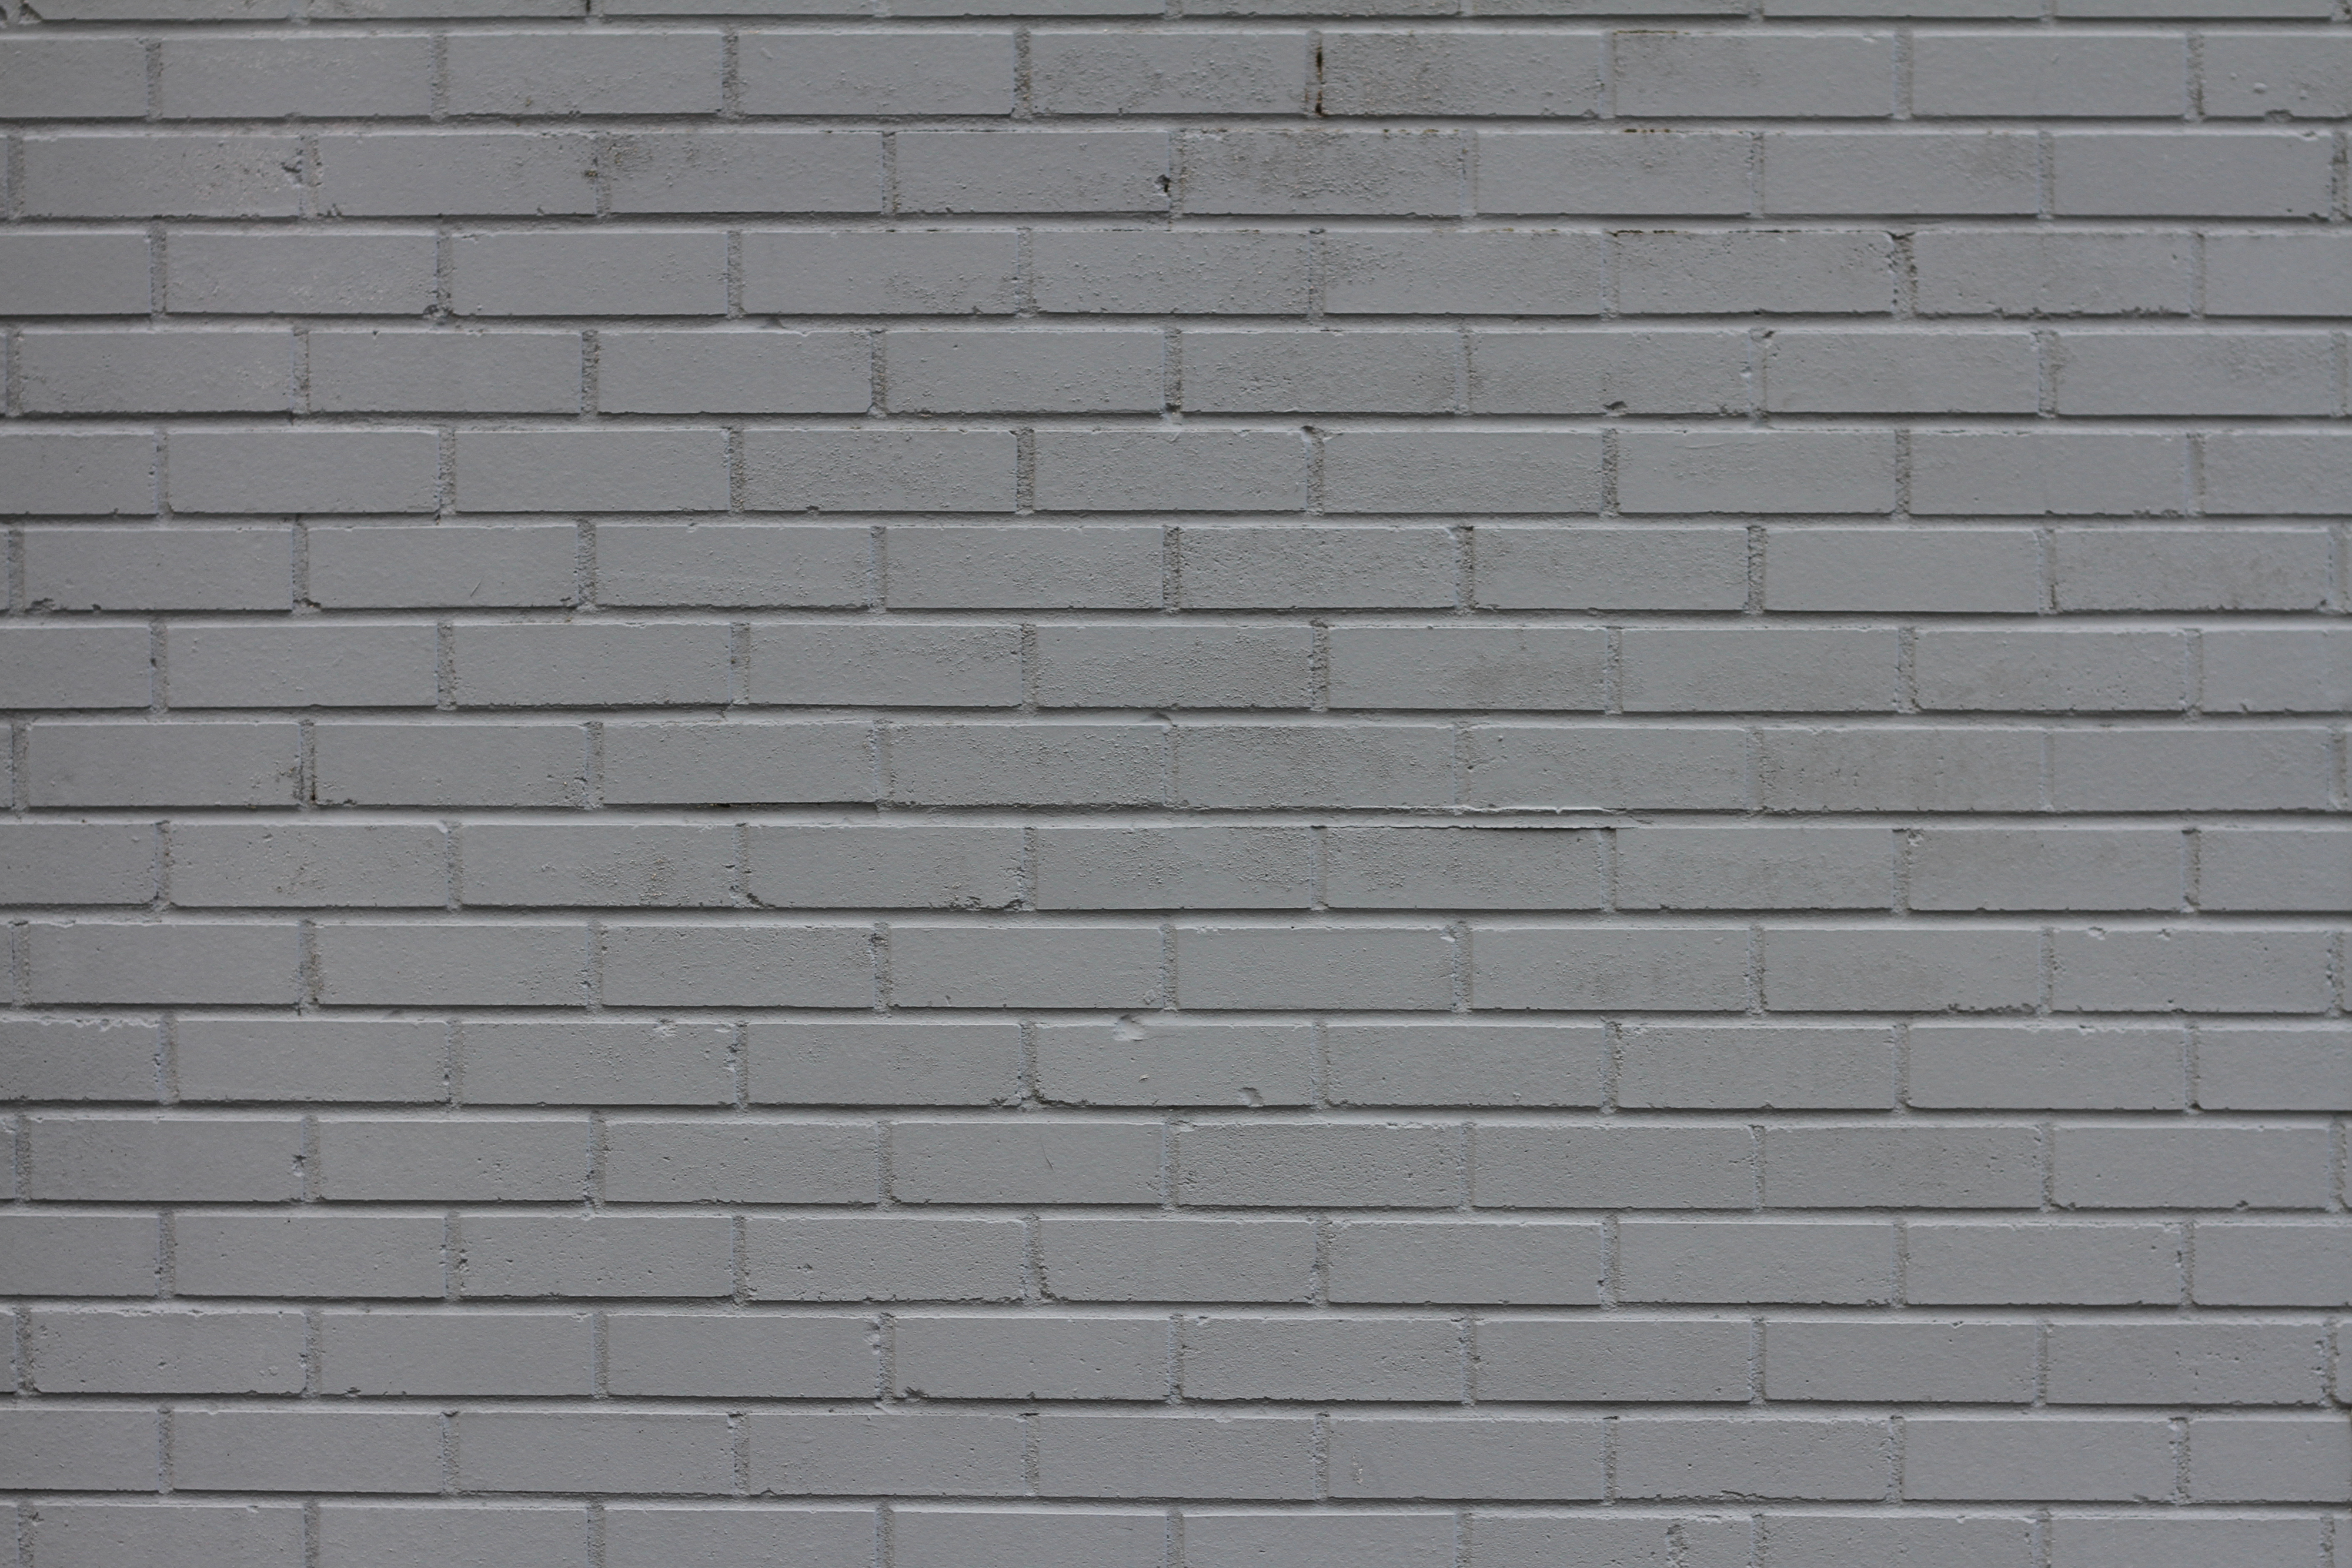 Painted Gray Brick Wall Texture Set - 14Textures